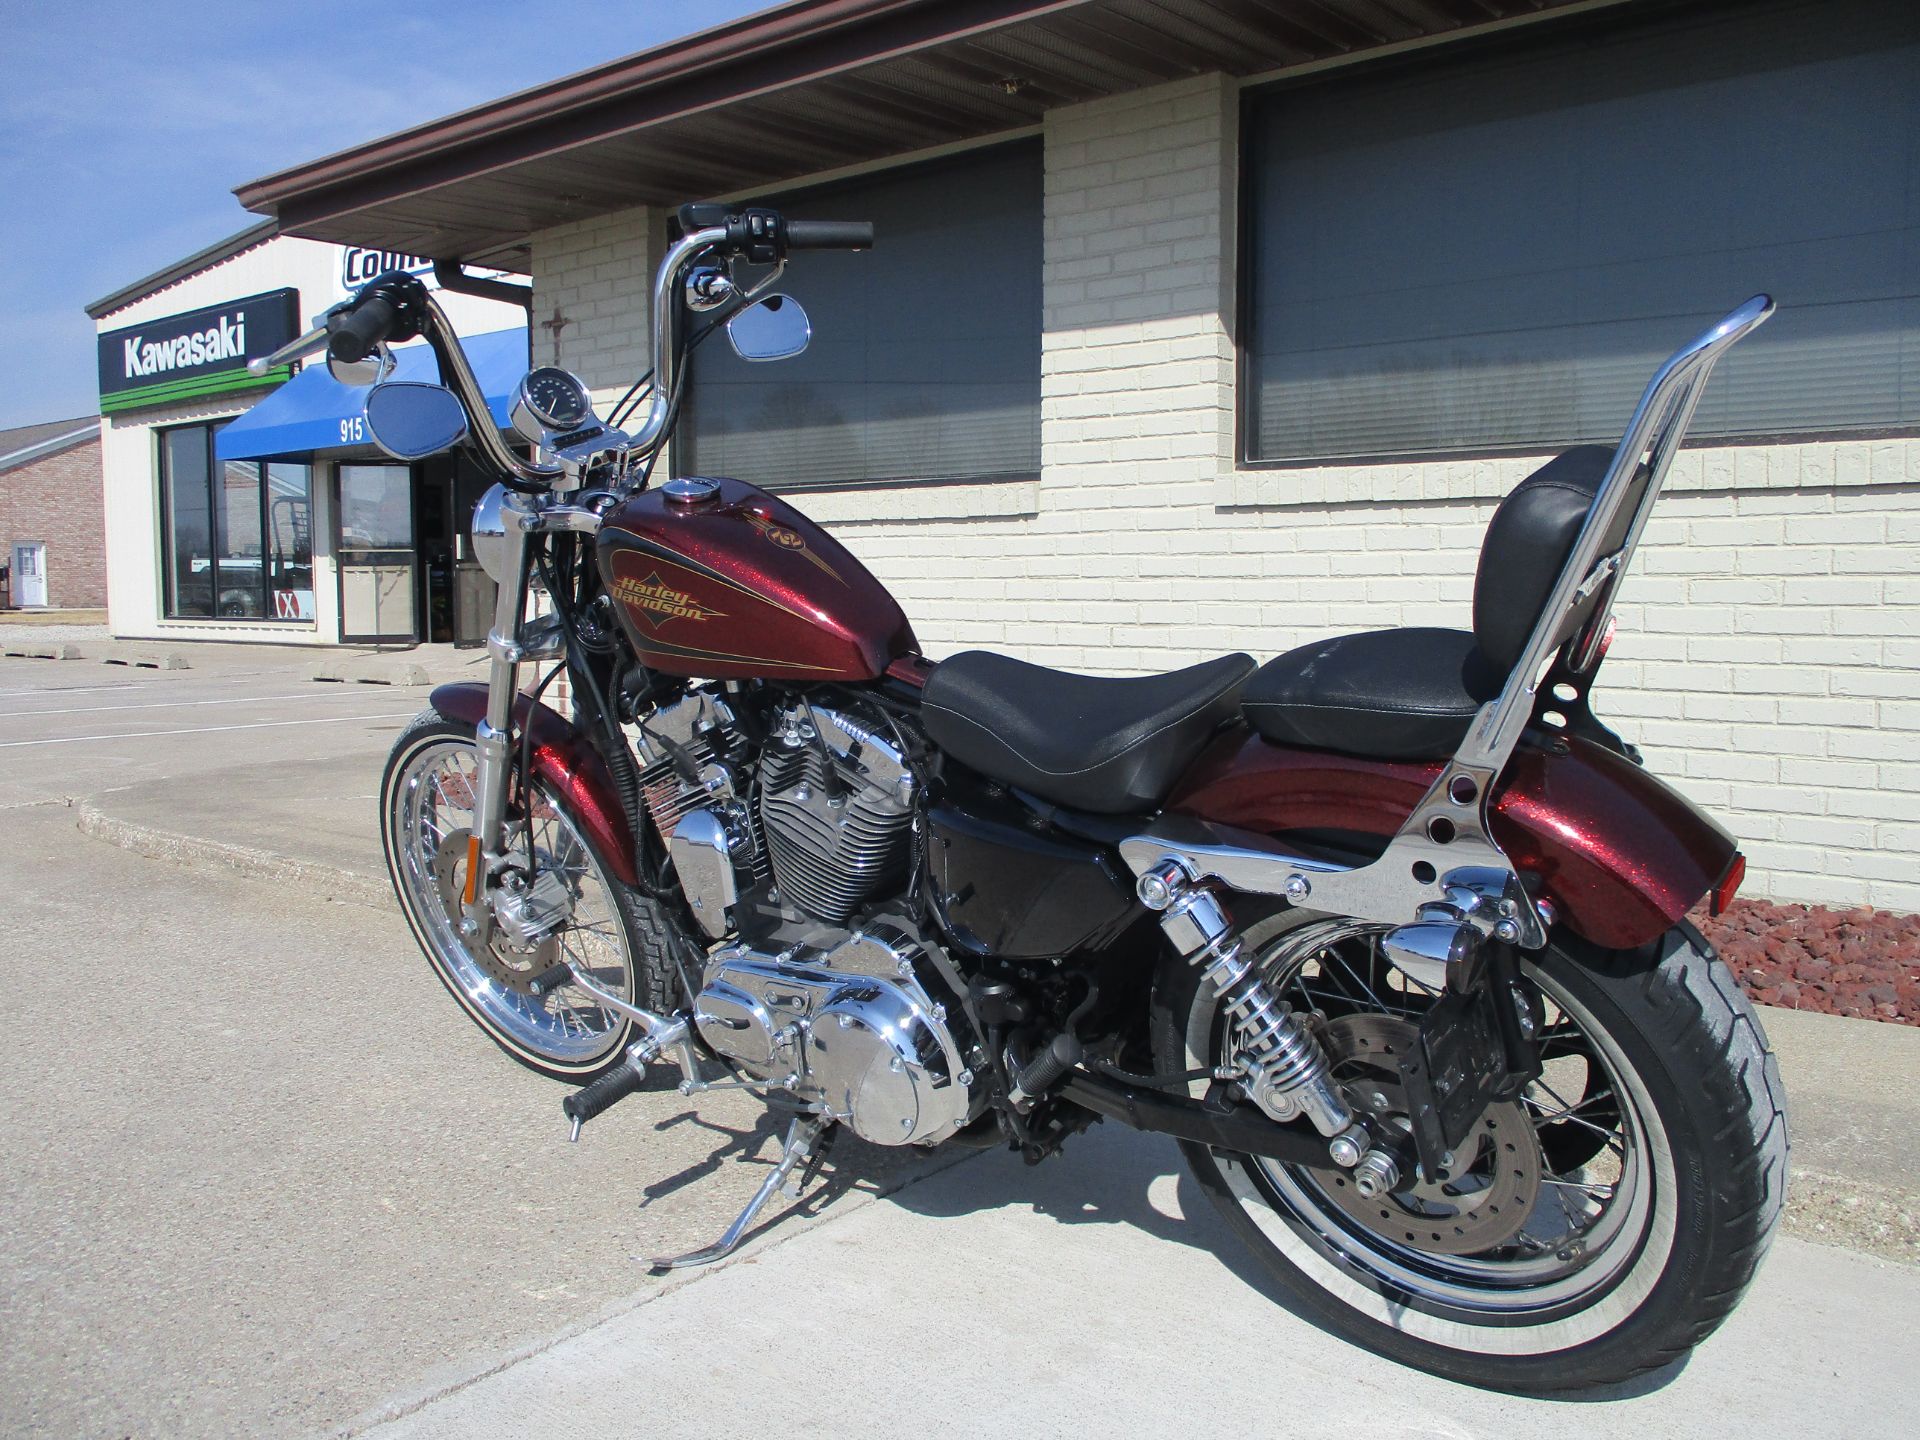 2012 Harley-Davidson Sportster® Seventy-Two™ in Winterset, Iowa - Photo 6